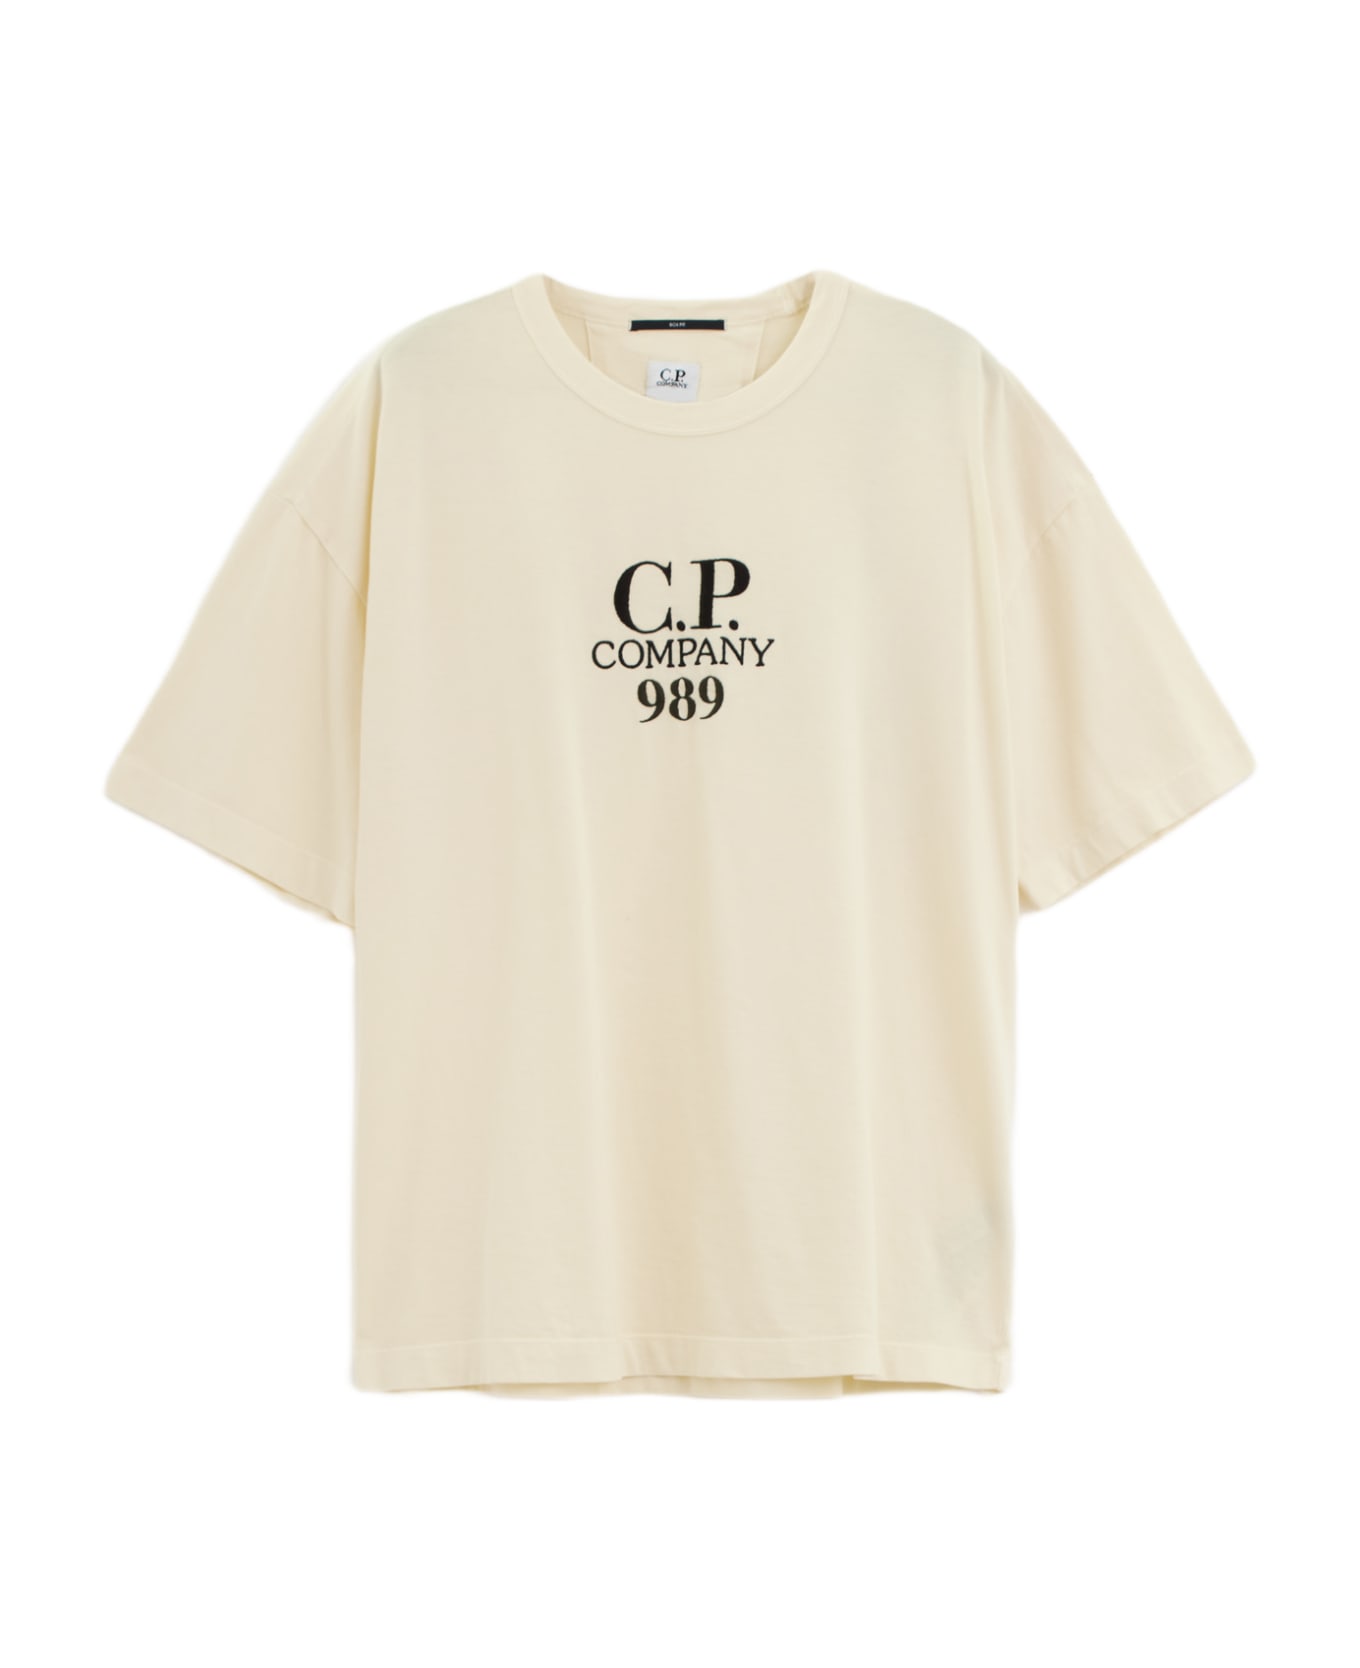 C.P. Company T-shirt - cream